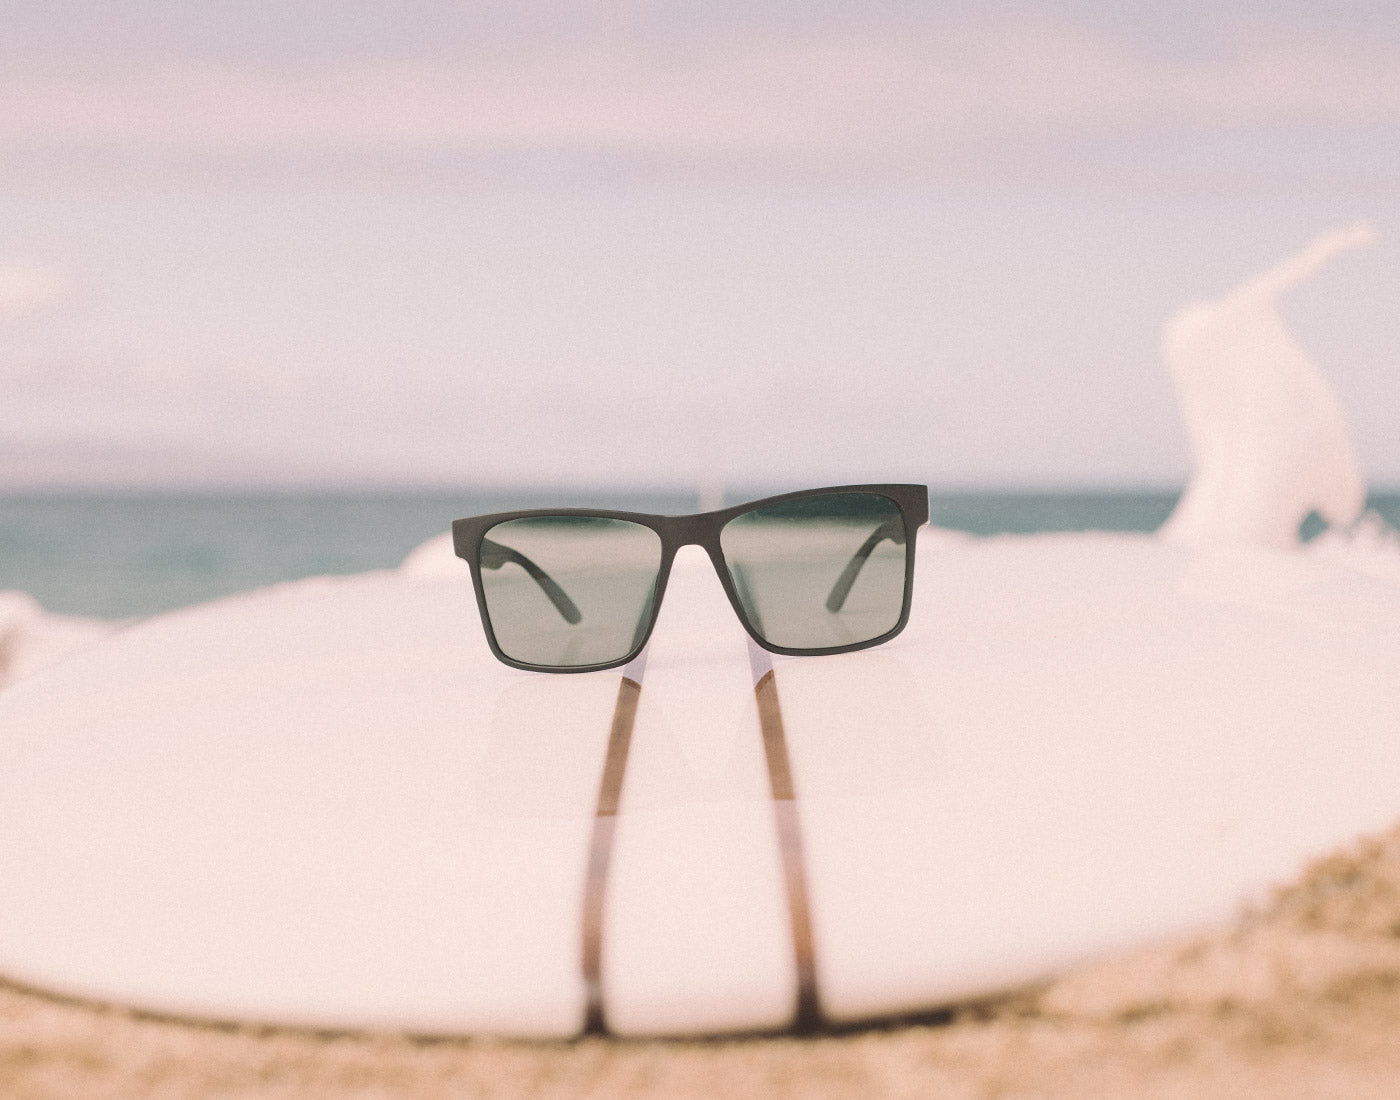 Polarized Sunglasses Explained - Why, How, When - Tifosi Optics